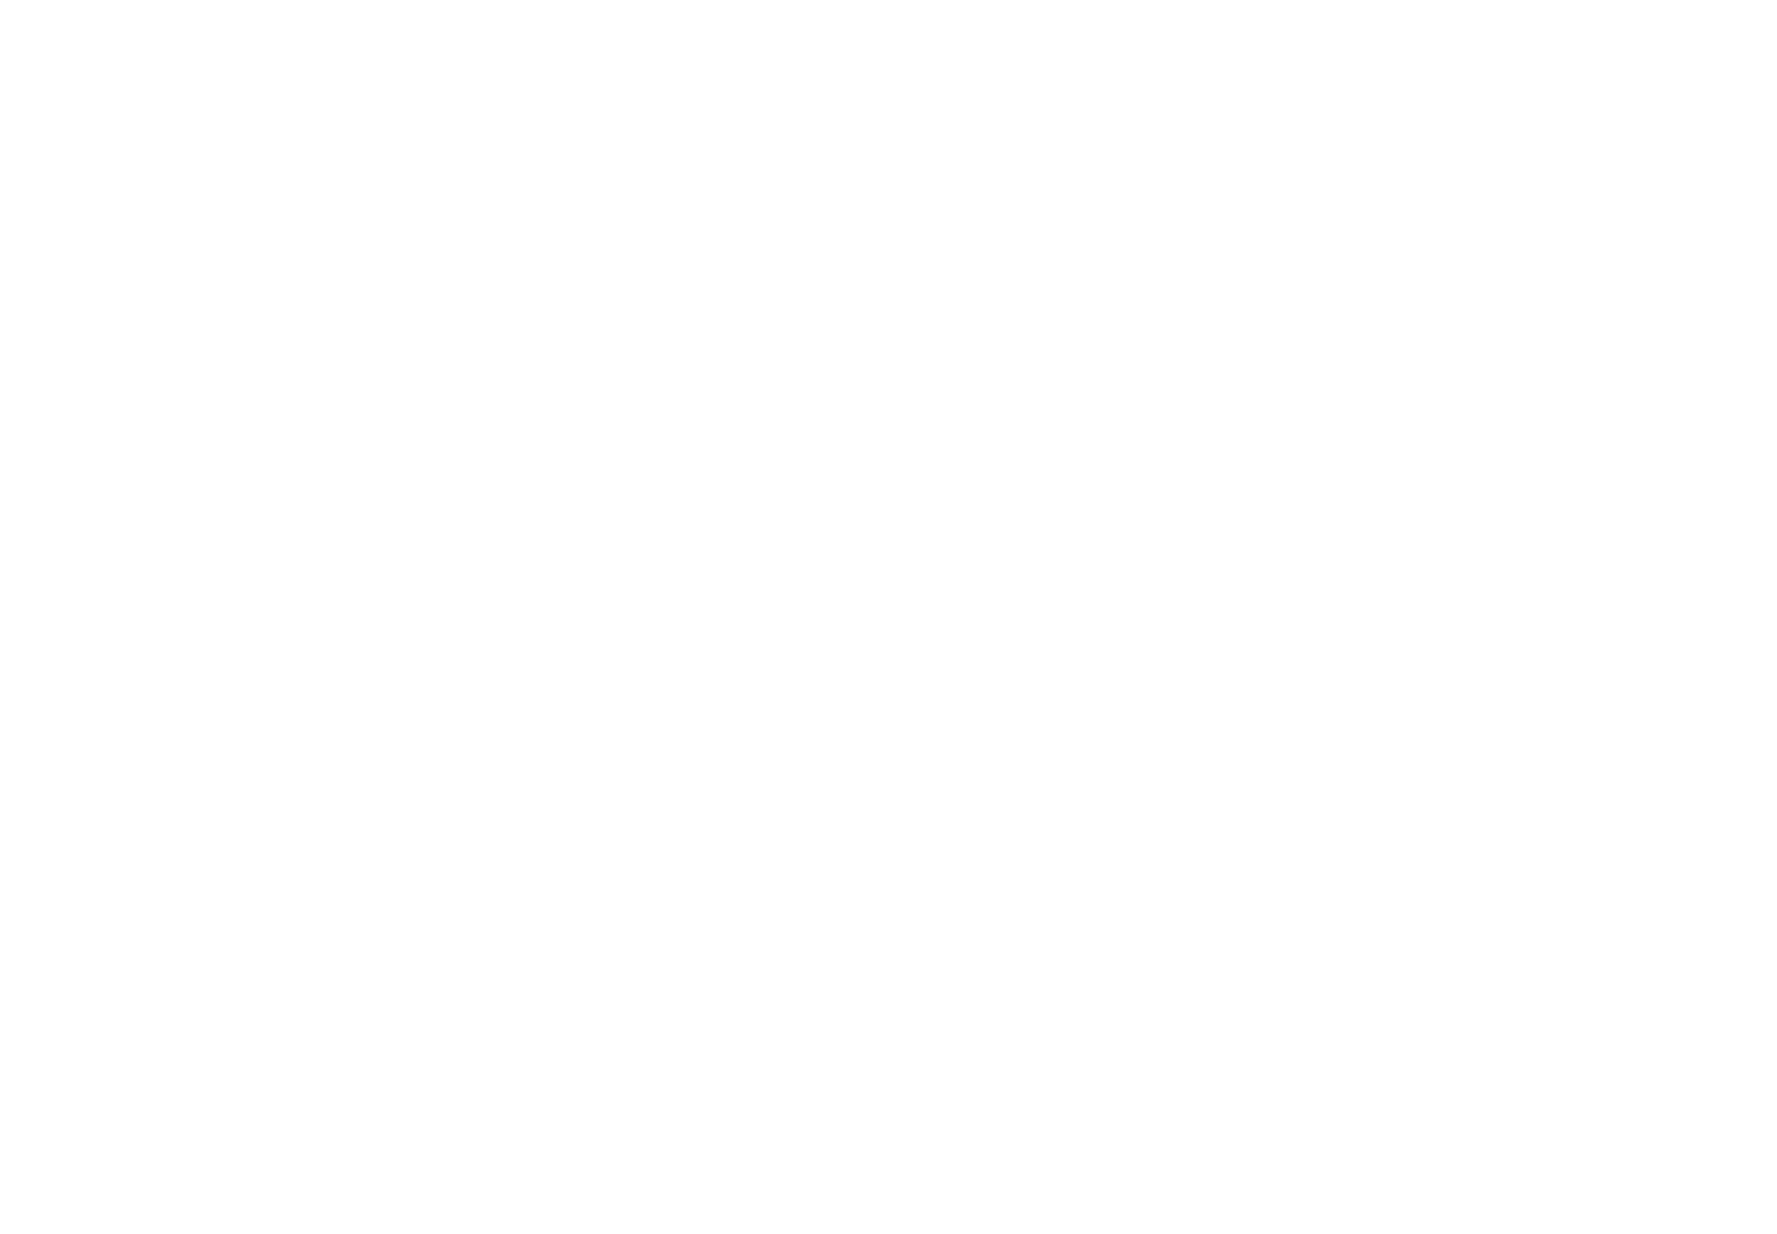 McInnis Appraisals, Inc